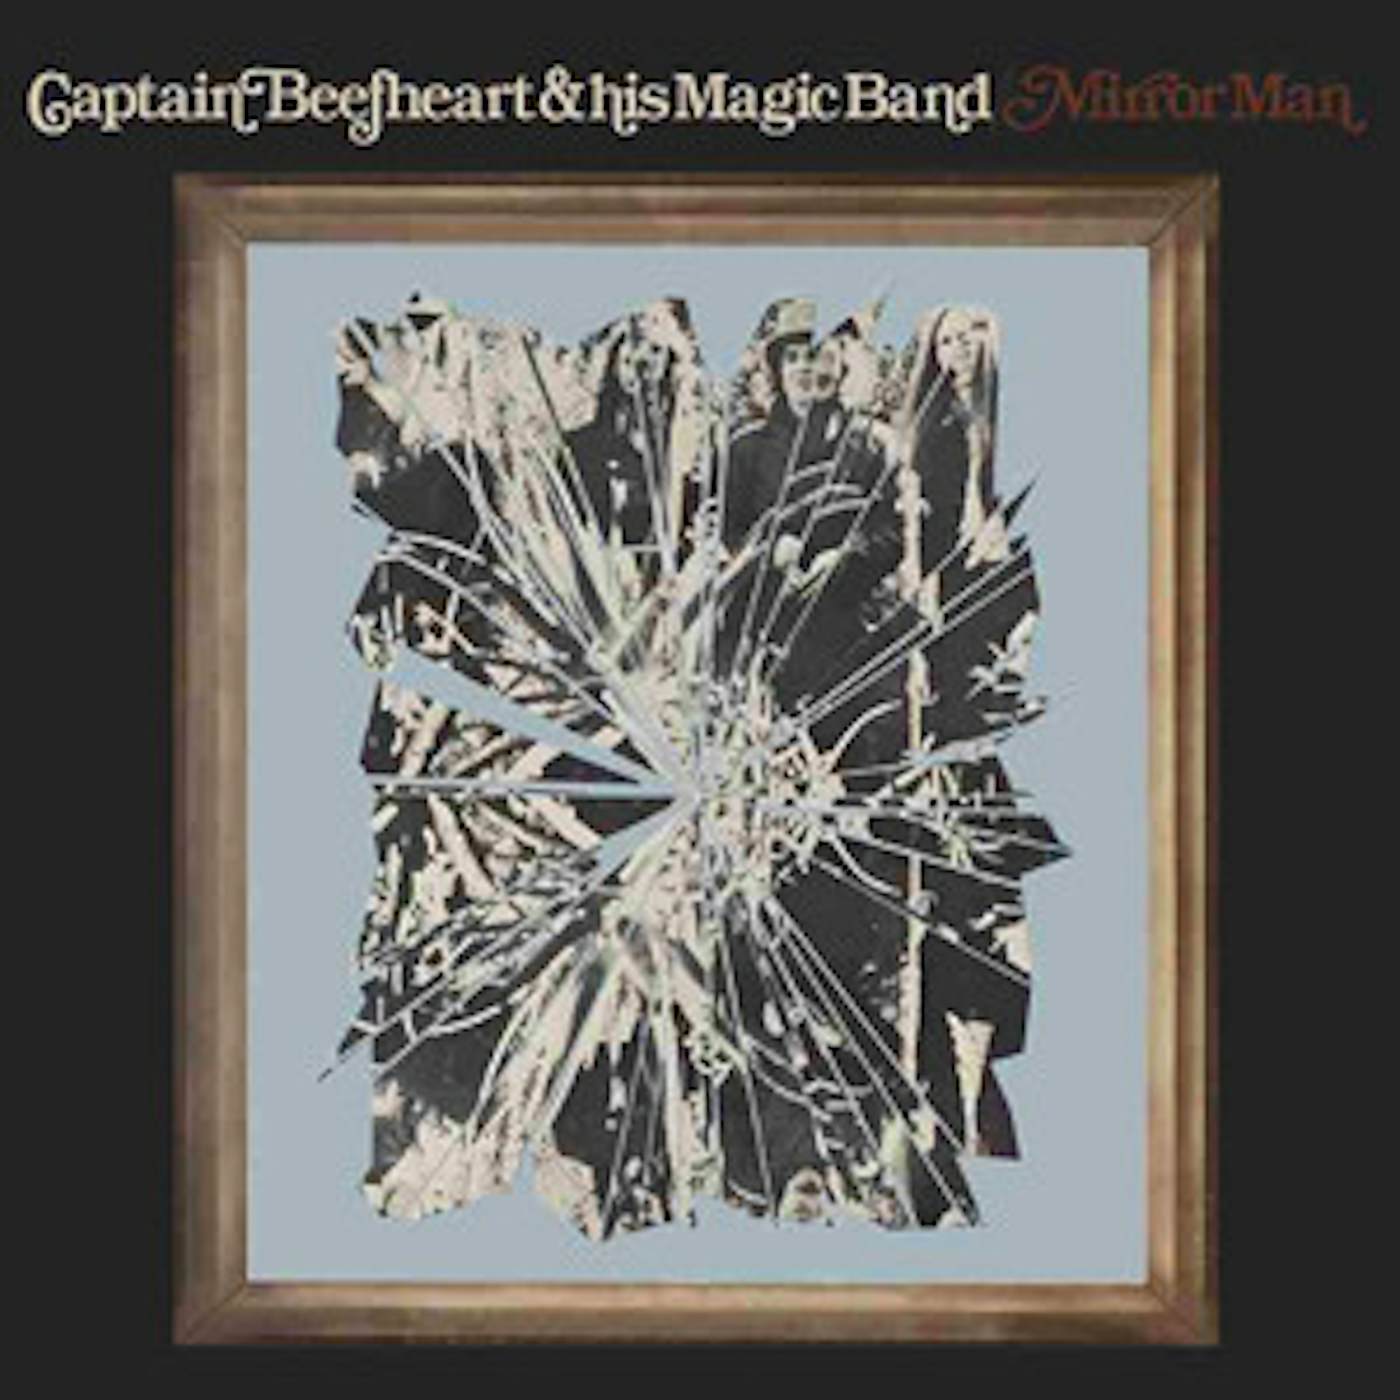 Captain Beefheart & His Magic Band Mirror Man Vinyl Record